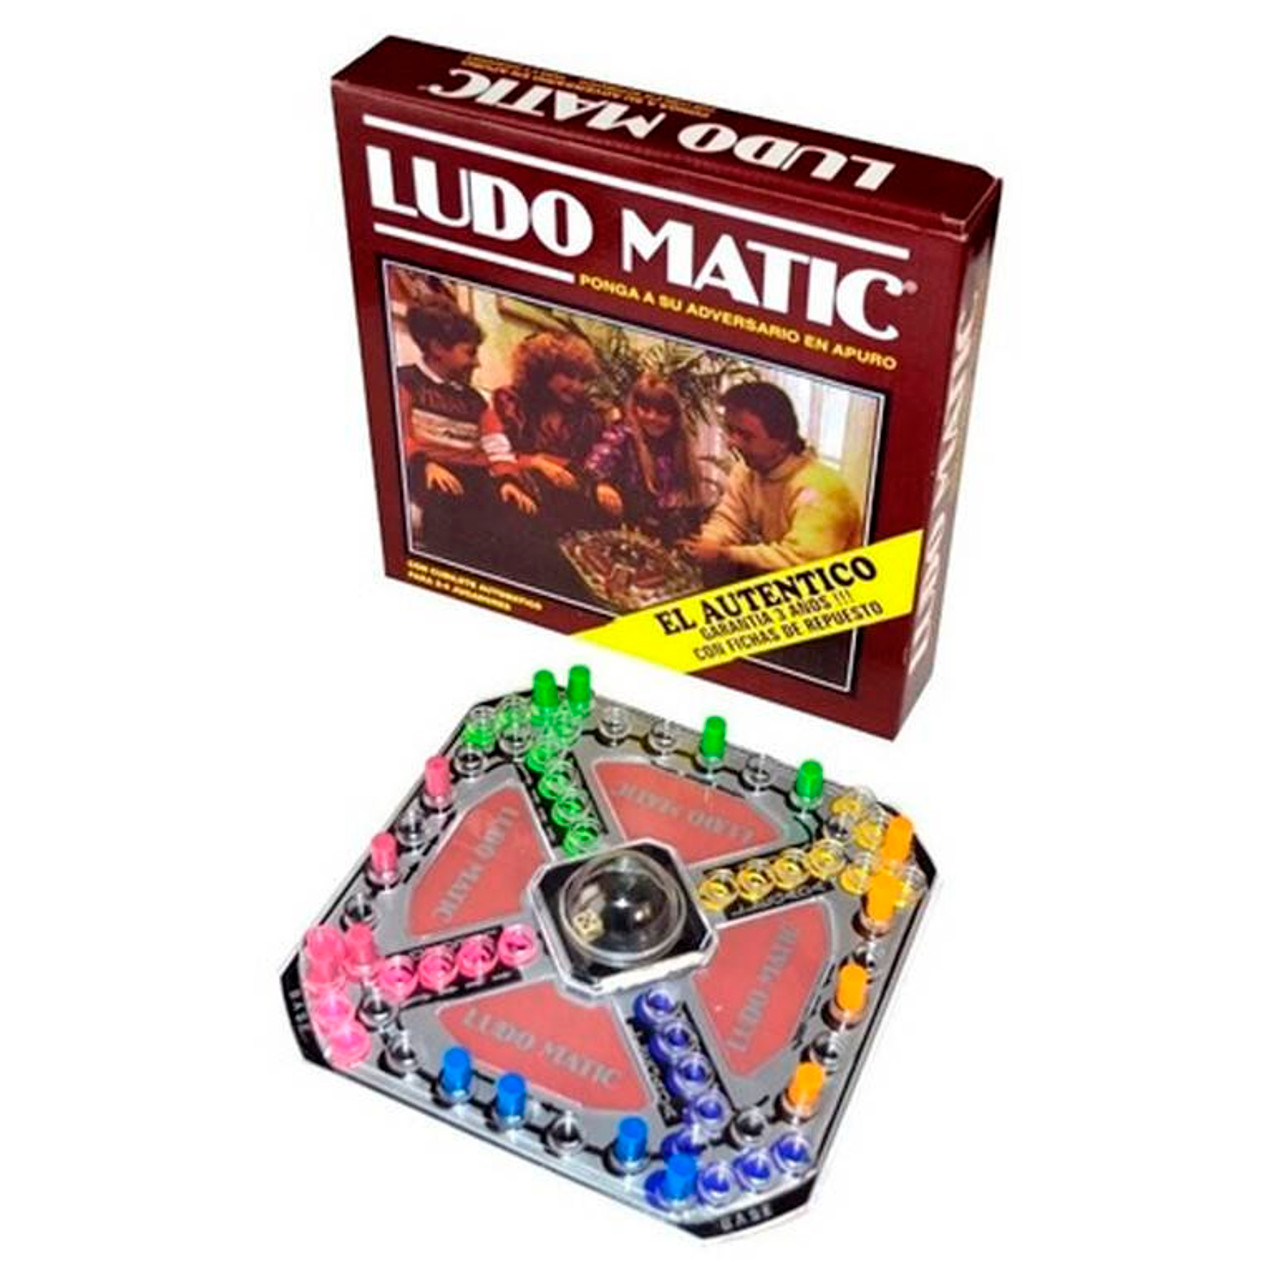 Family Board Games - Ludo - Ludo Club - Ludo Classic -Snakes And